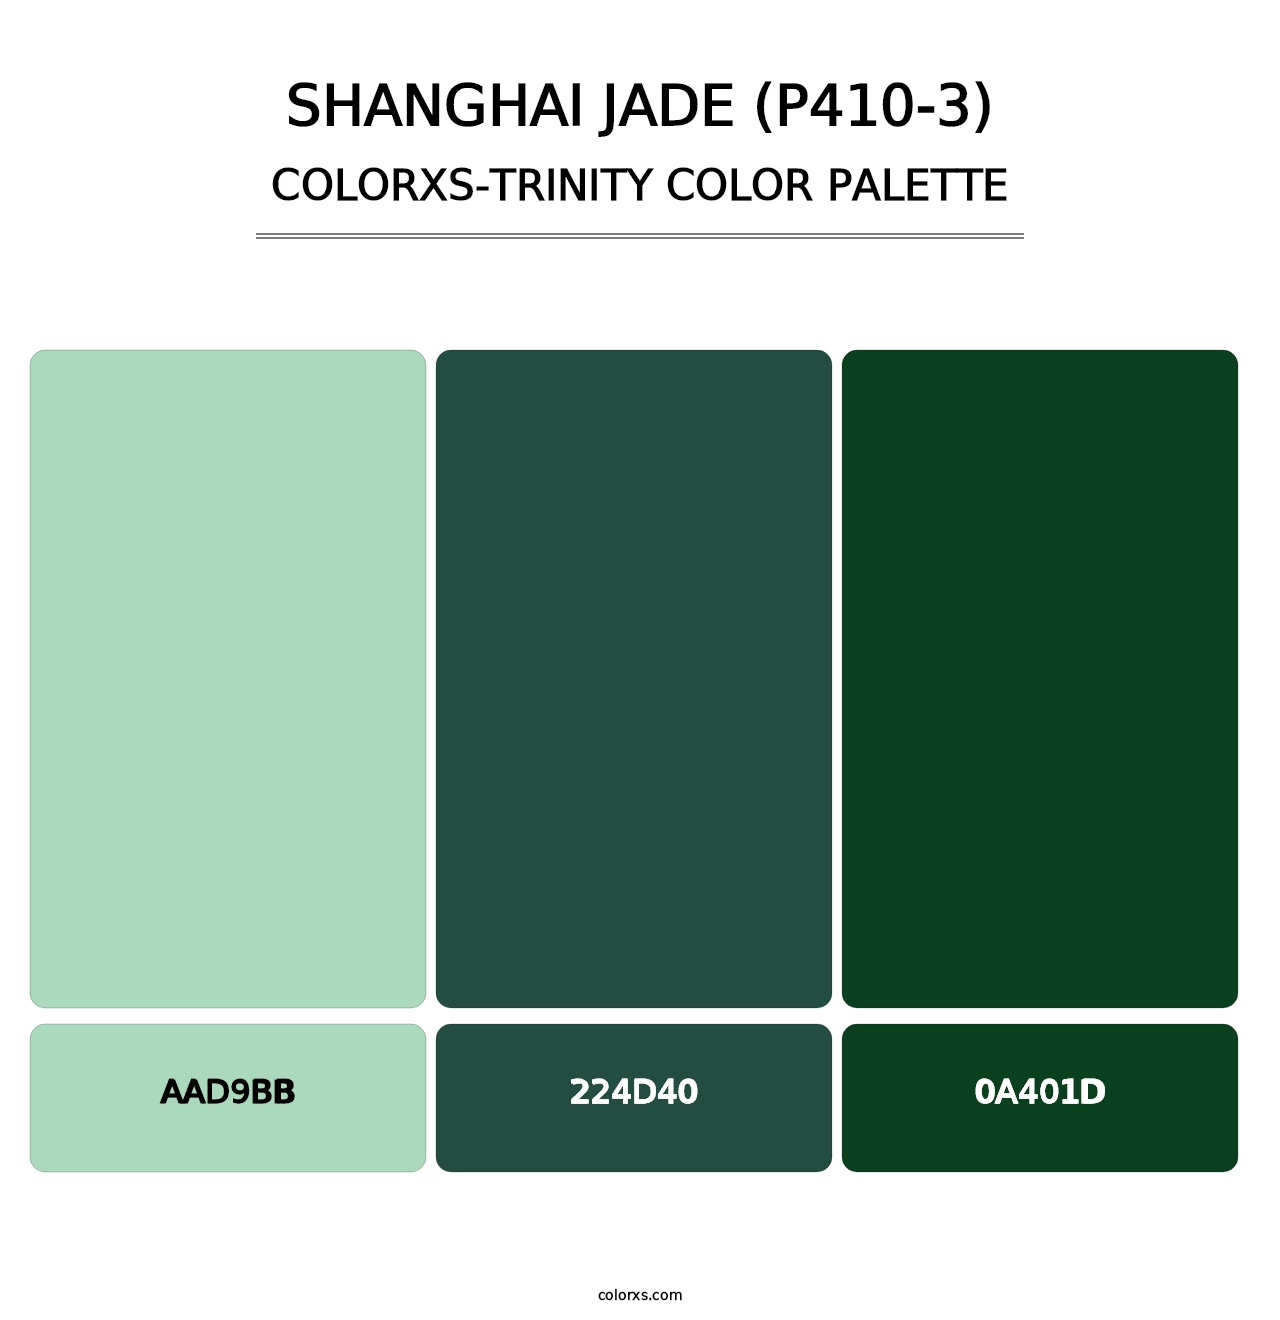 Shanghai Jade (P410-3) - Colorxs Trinity Palette